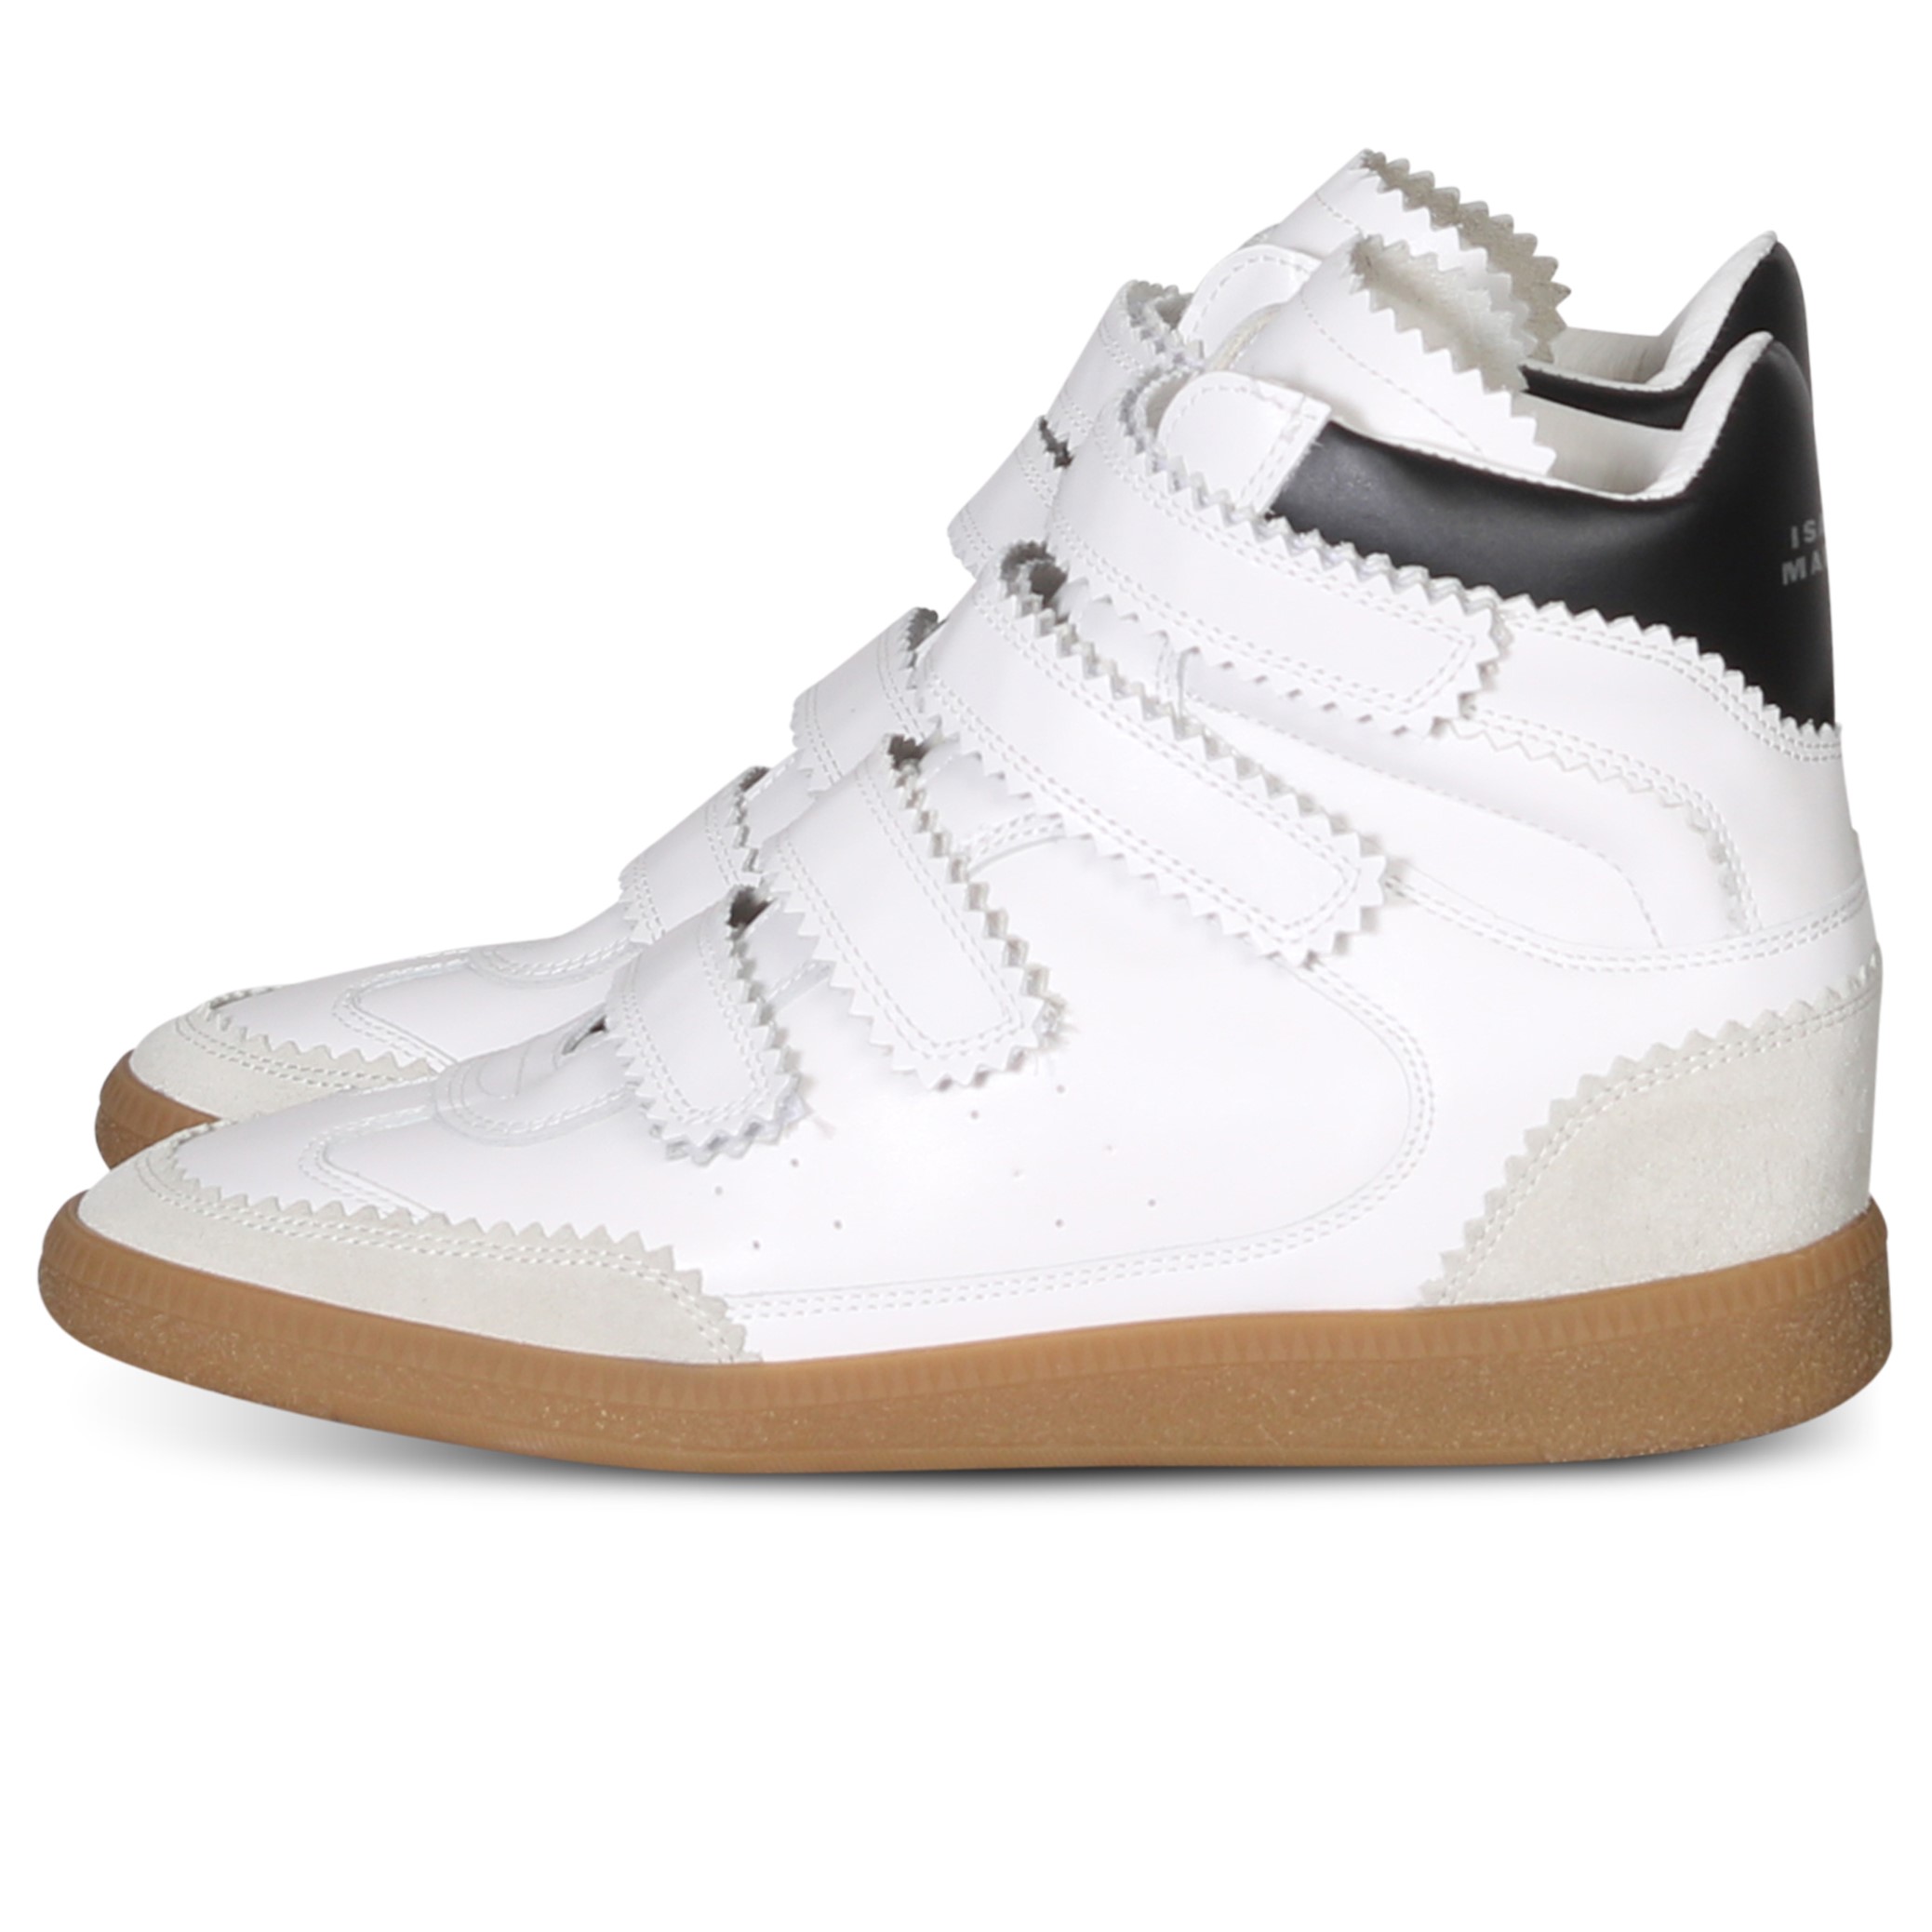 ISABEL MARANT Bilsy Sneaker in White 38